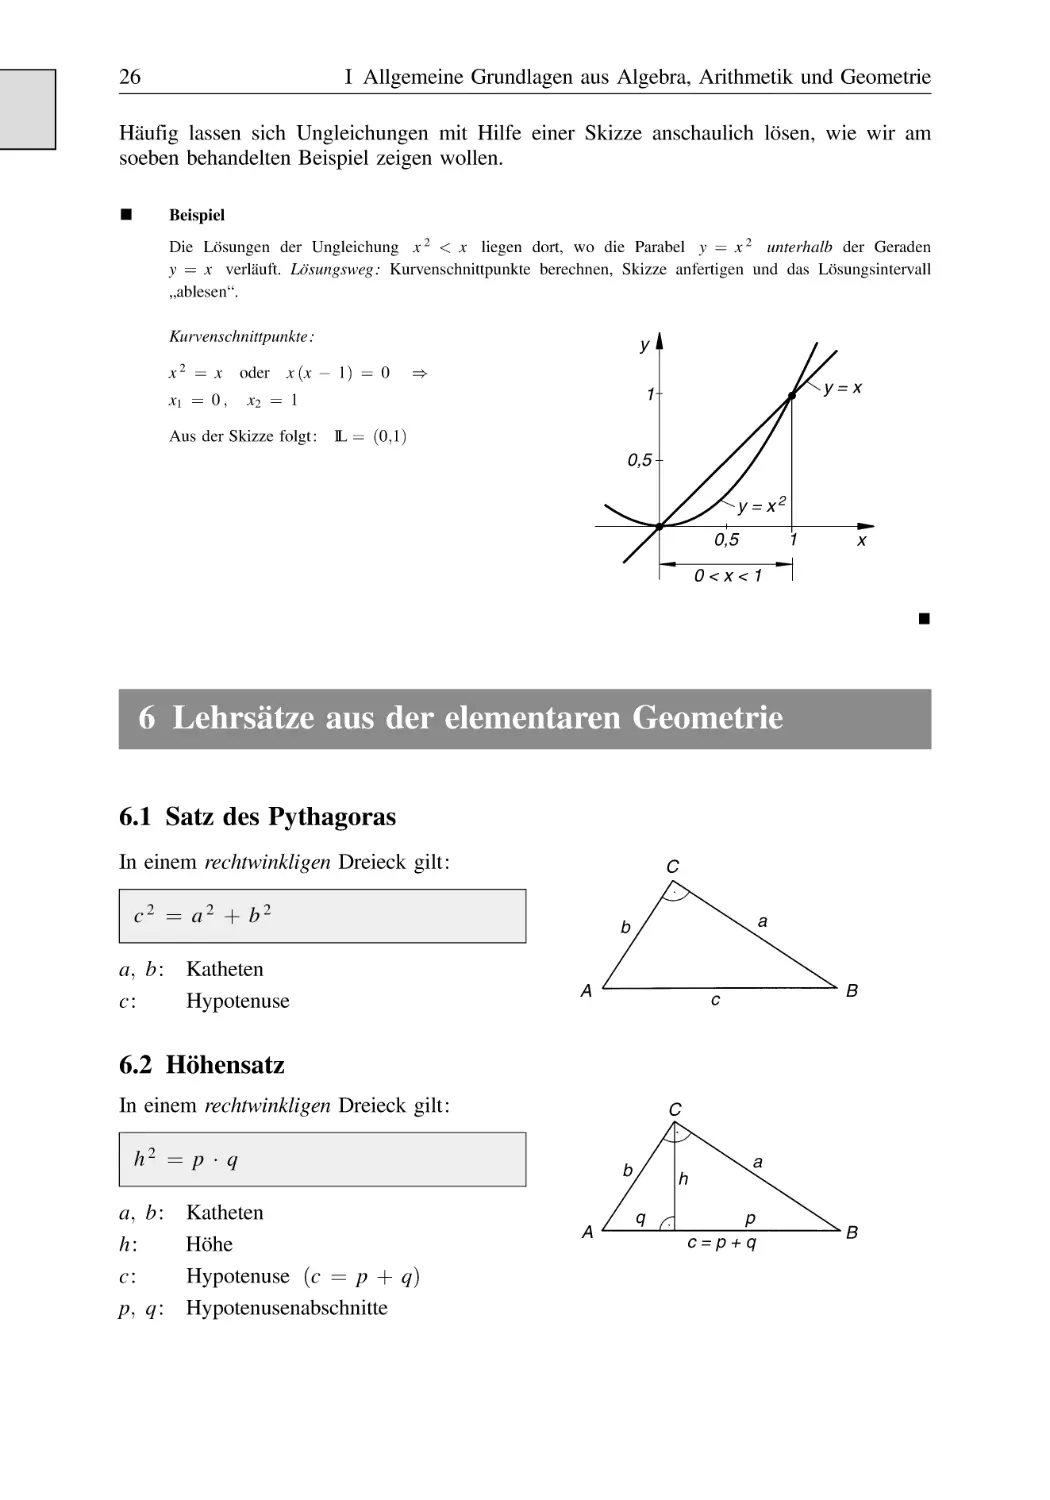 6 Lehrsätze aus der elementaren Geometrie
6.1 Satz des Pythagoras
6.2 Höhensatz